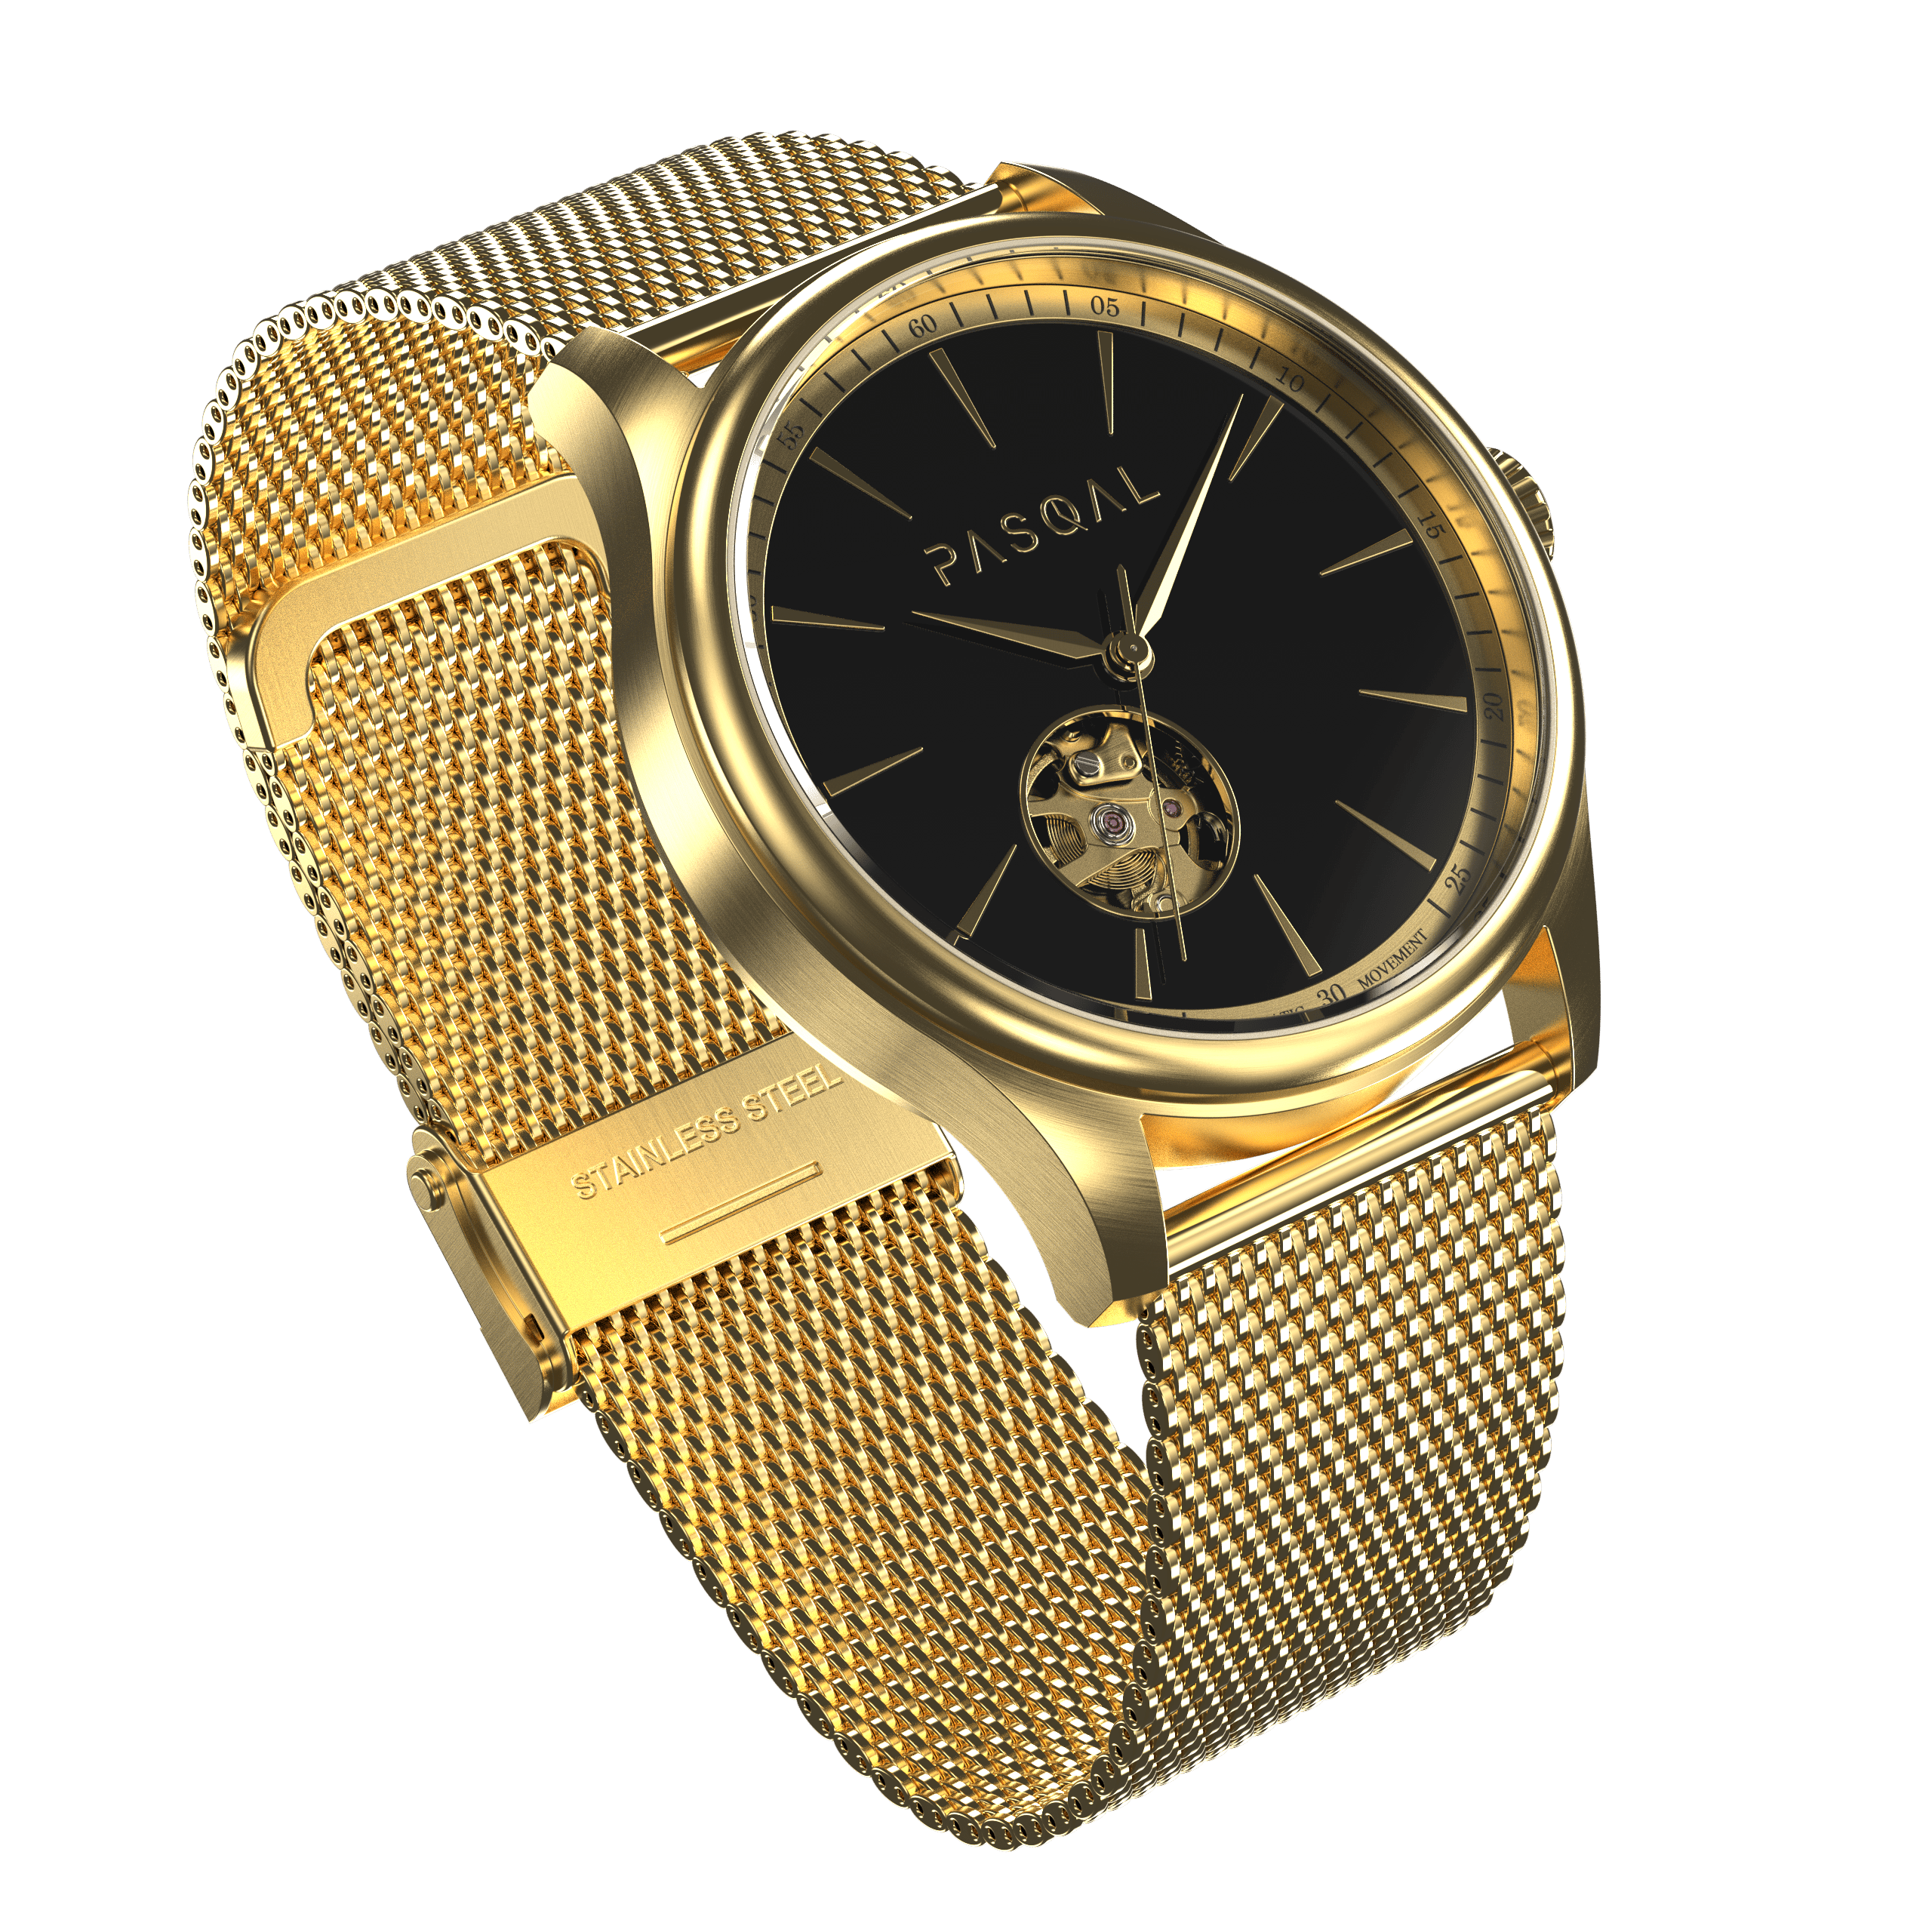 Wilhelm 42 Gold/Black - Pasqal Watches